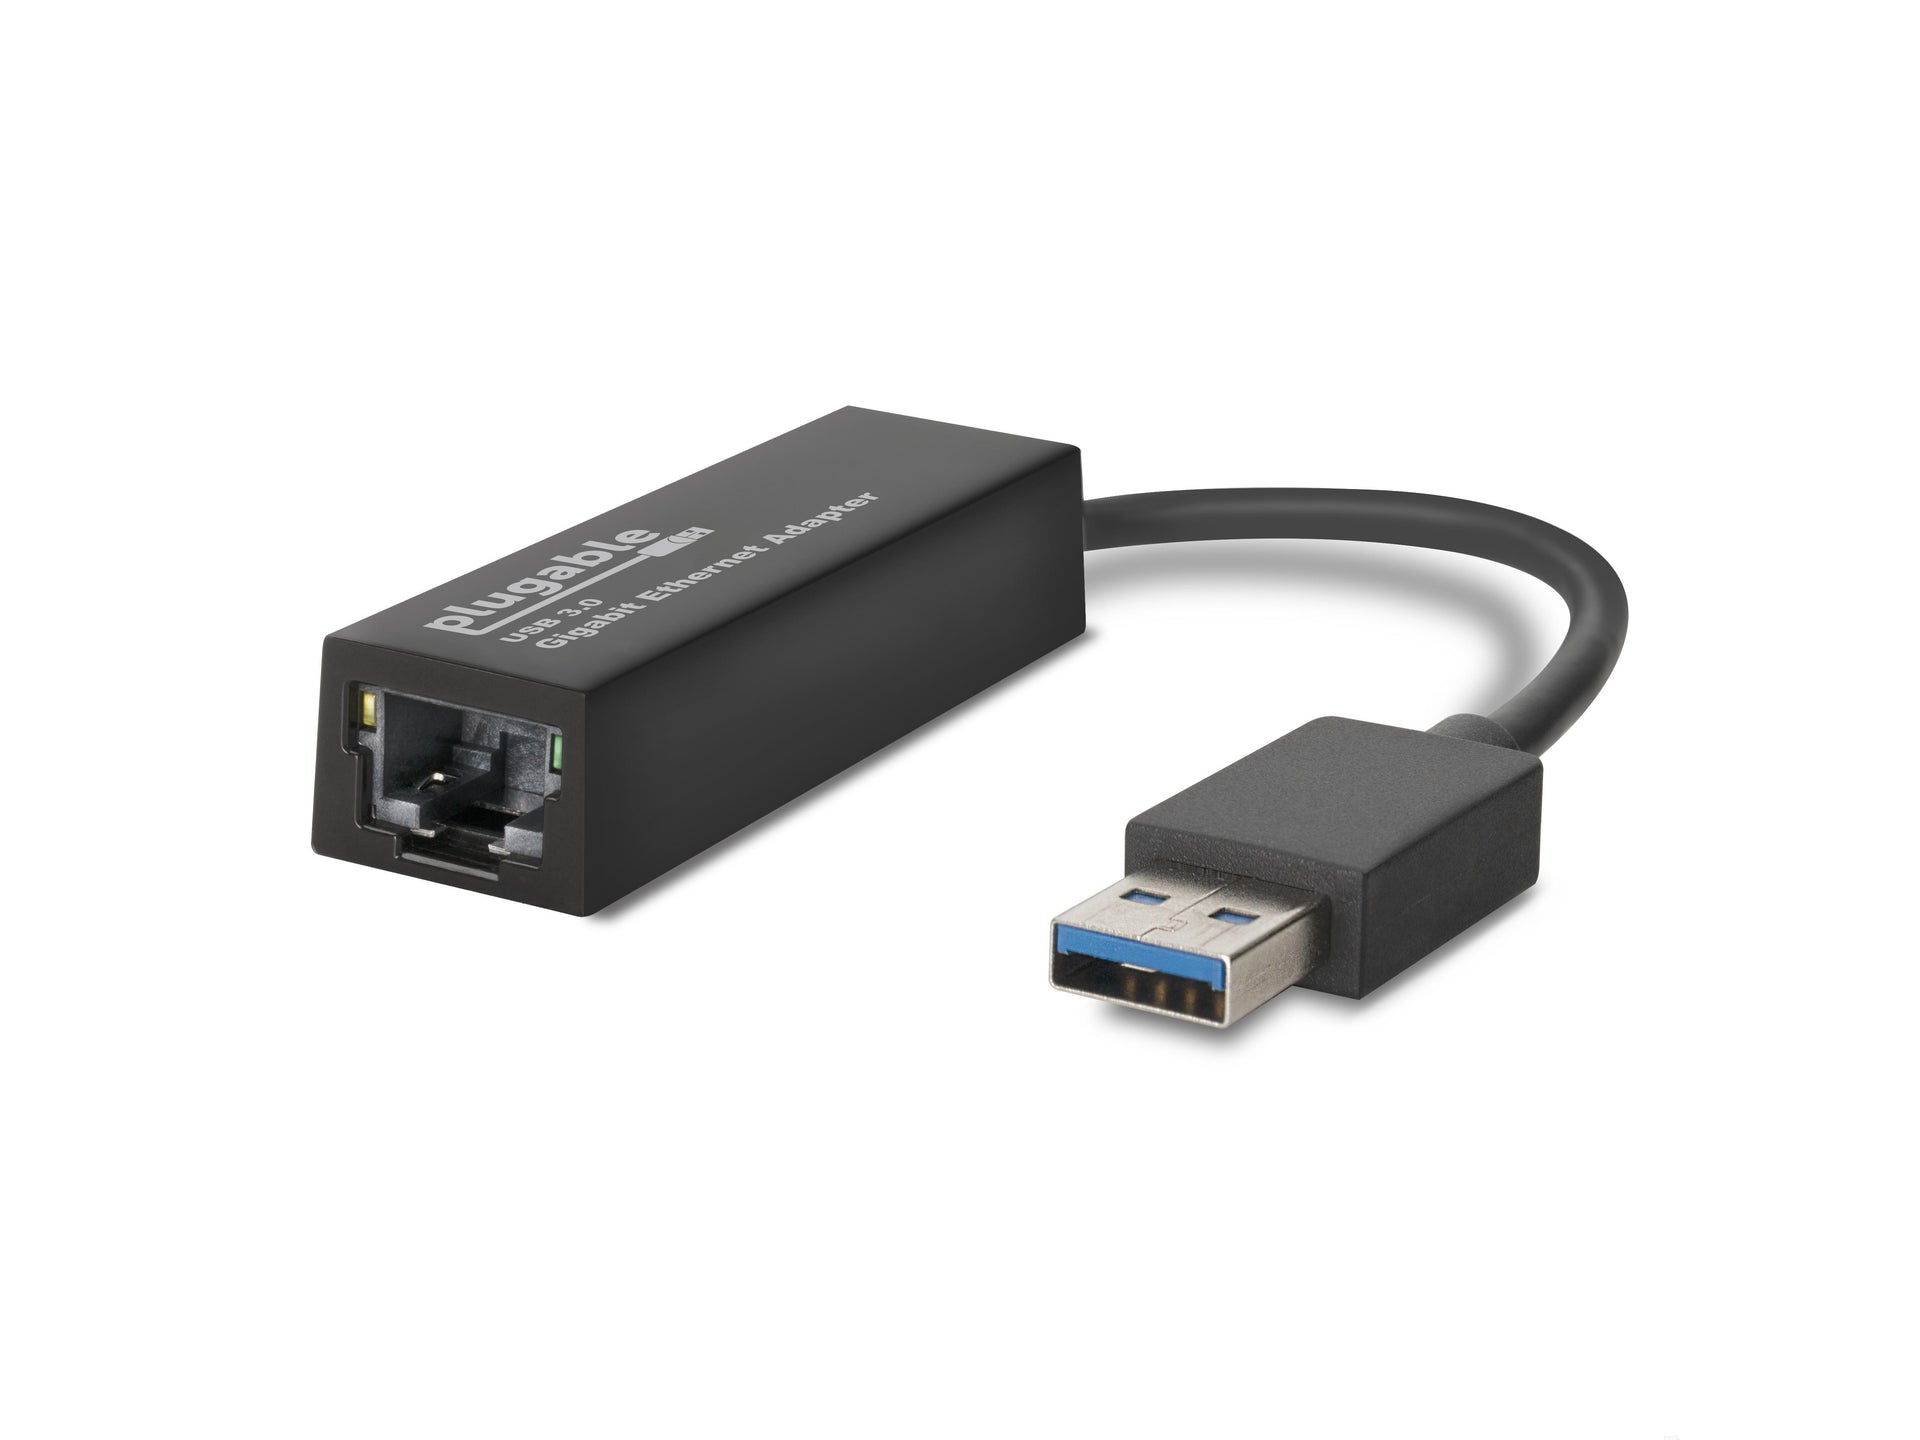 prototype sweater Champagne Plugable USB 3.0 Gigabit Ethernet Adapter – Plugable Technologies